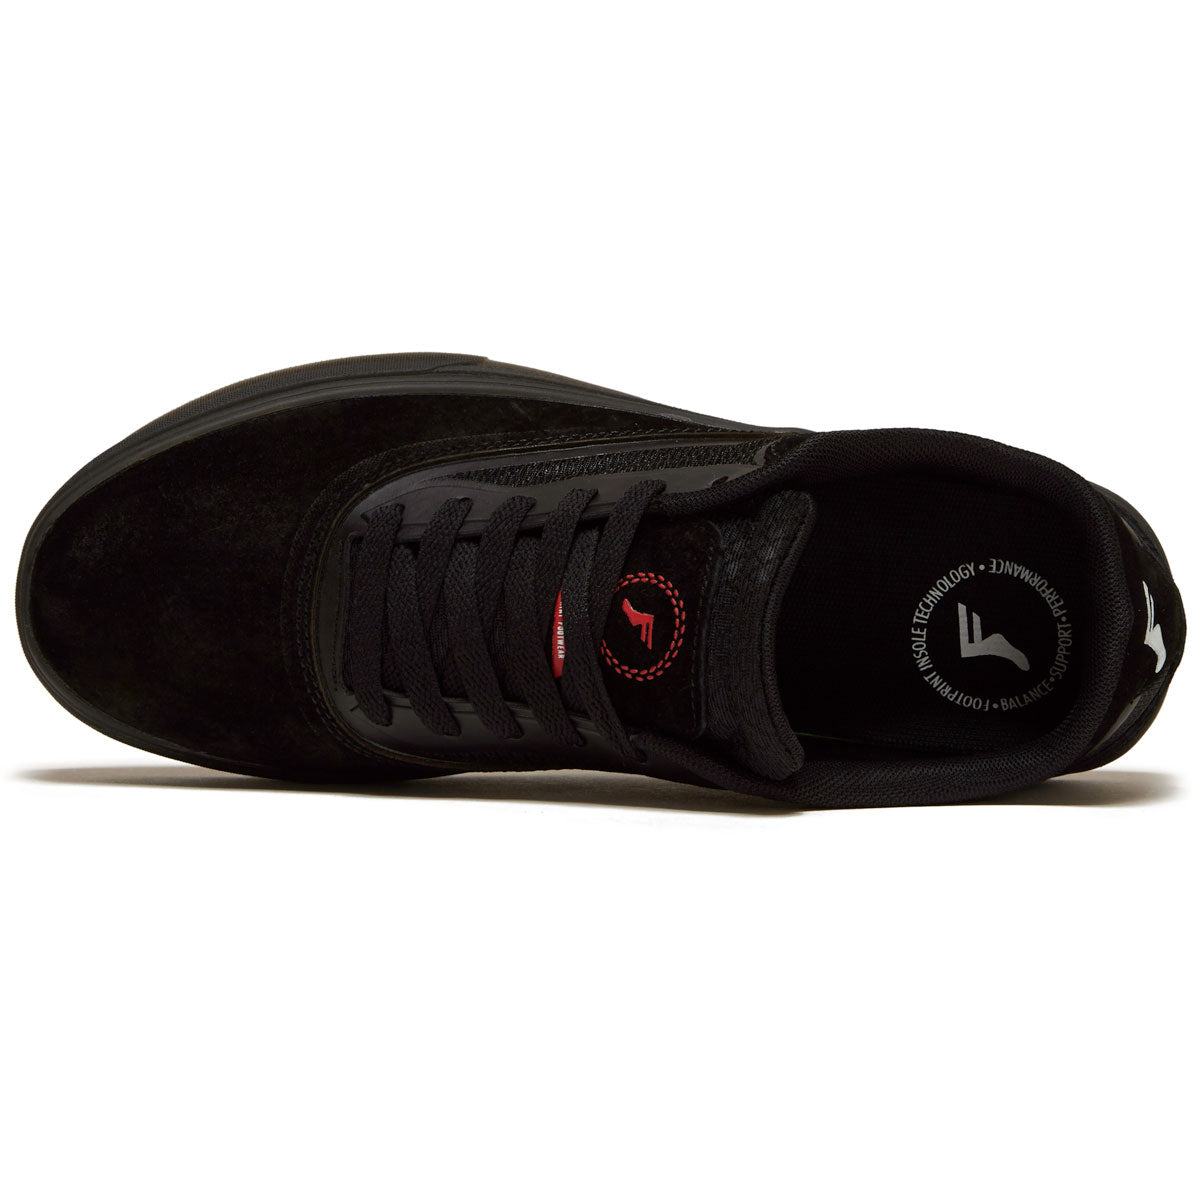 FP Velocity Shoes - Black Ice - 9US